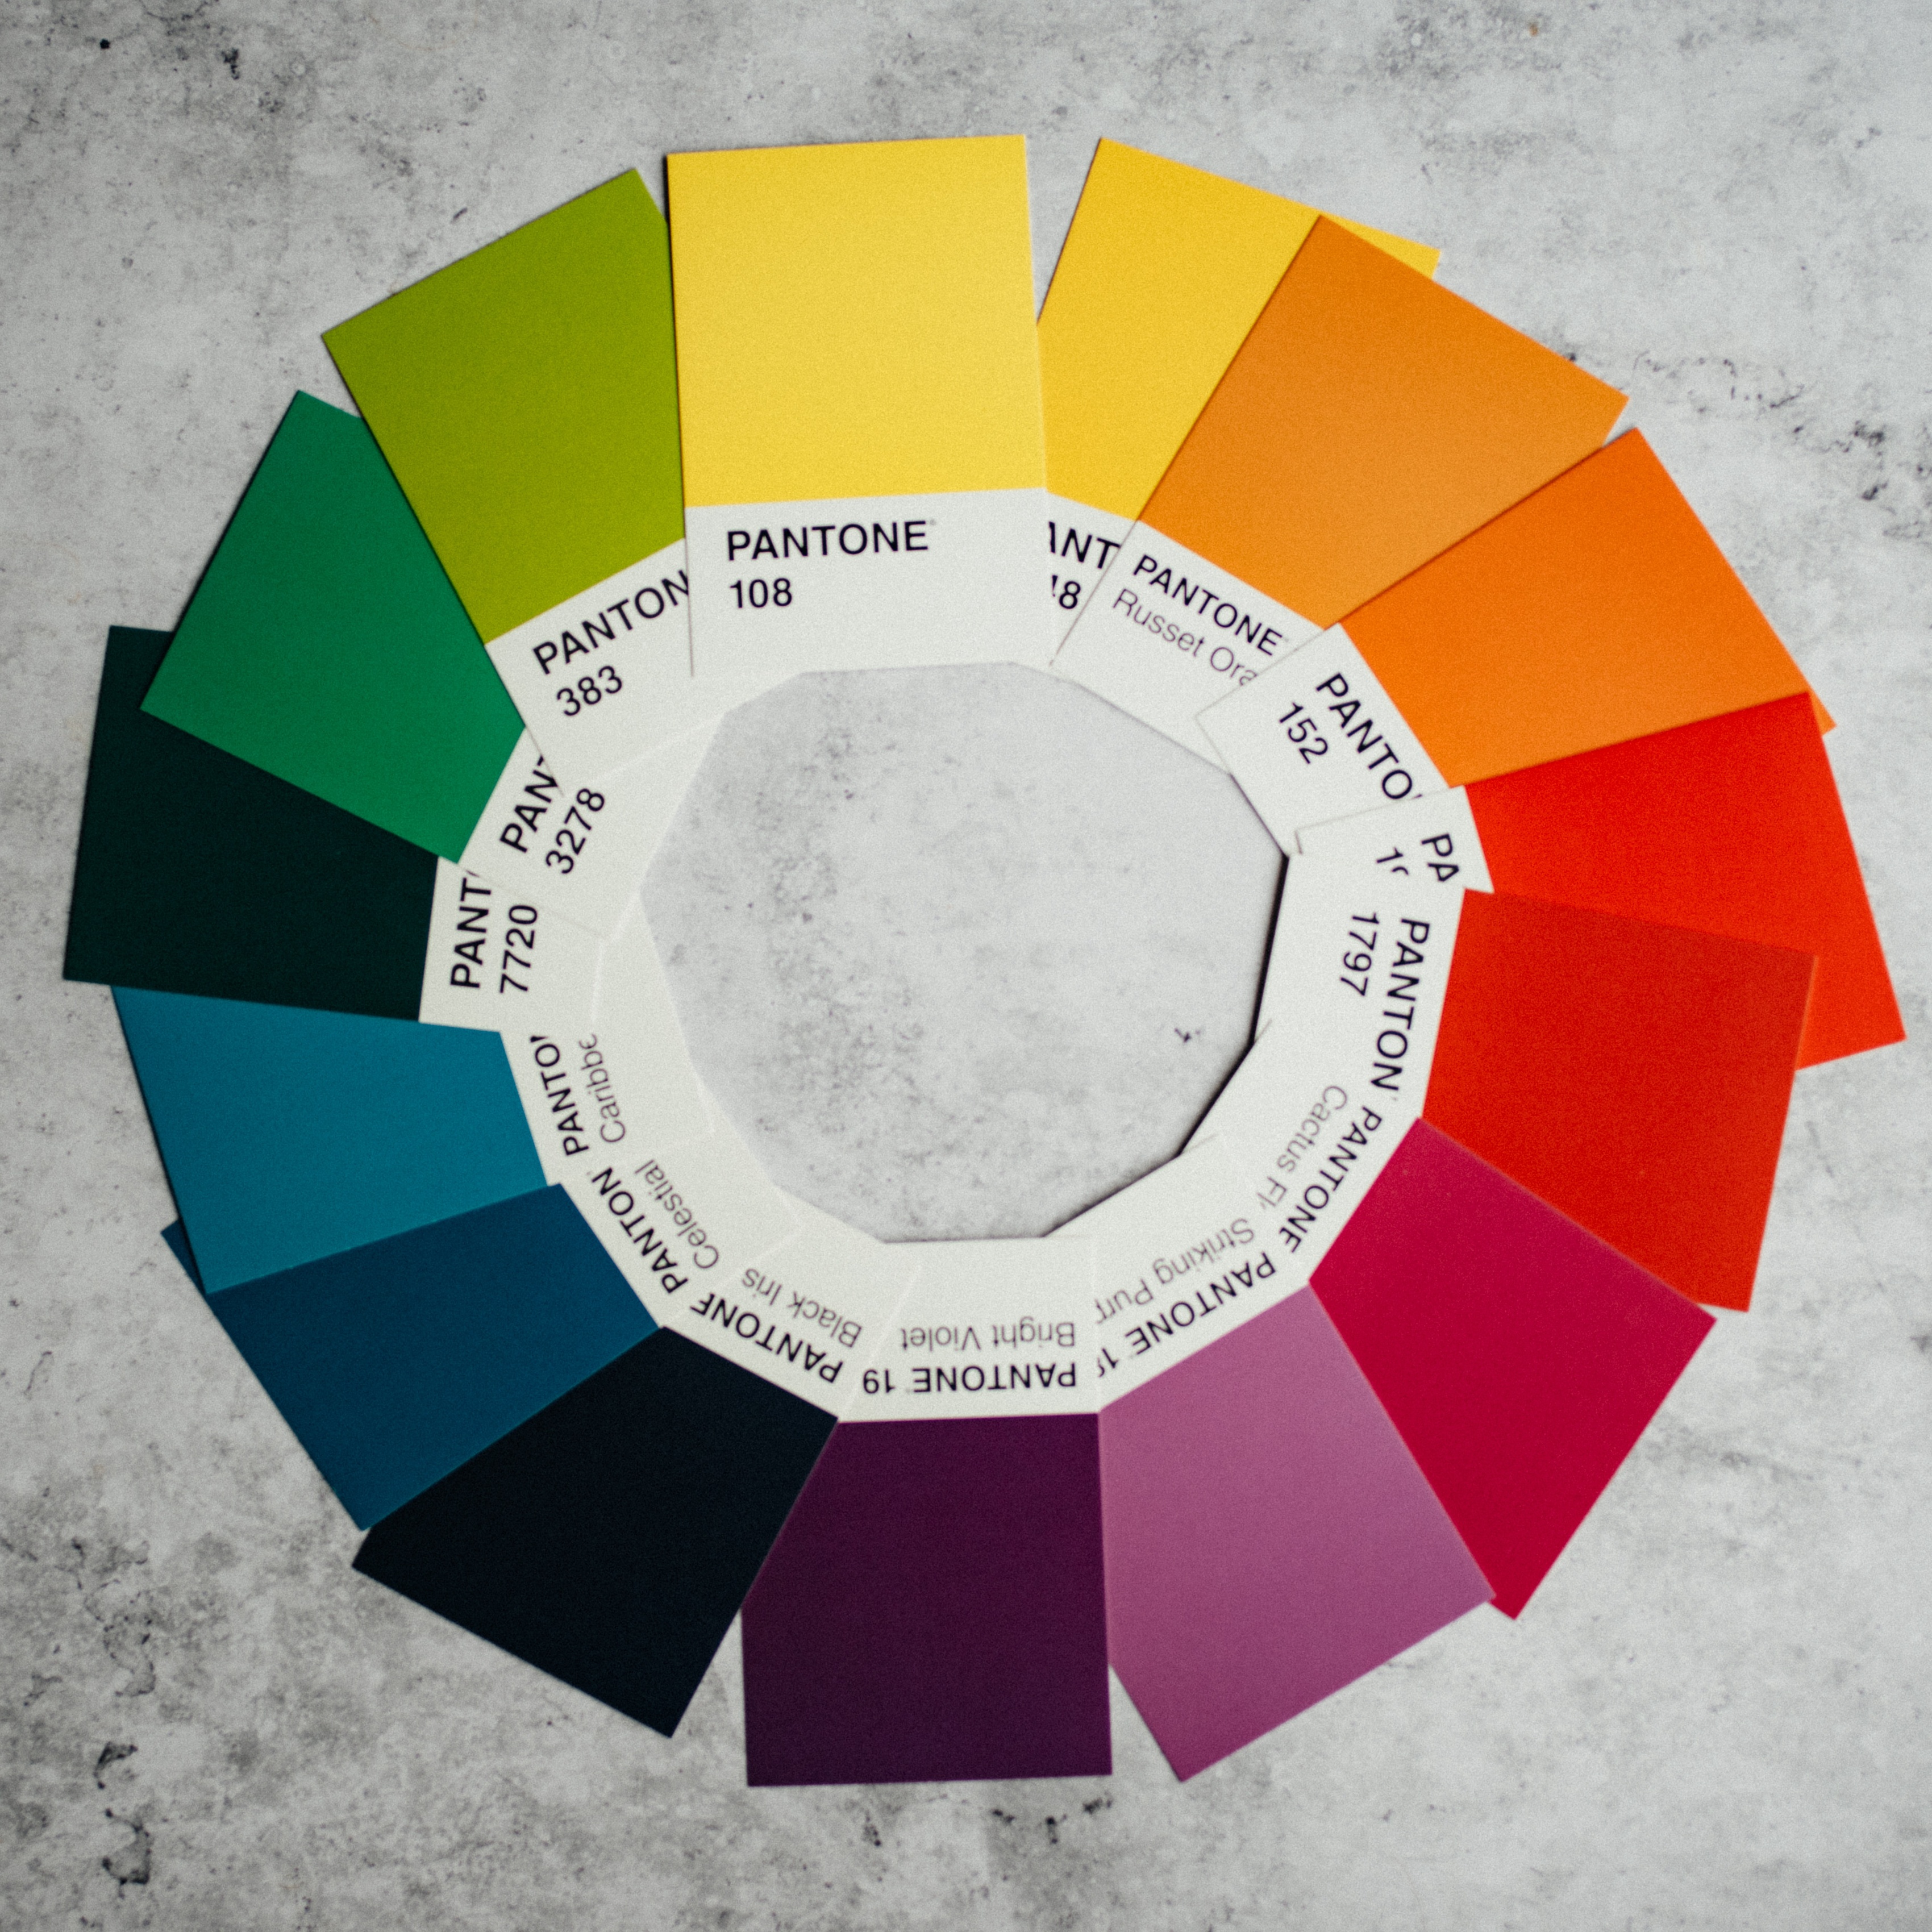 A Pantone representation of the color wheel